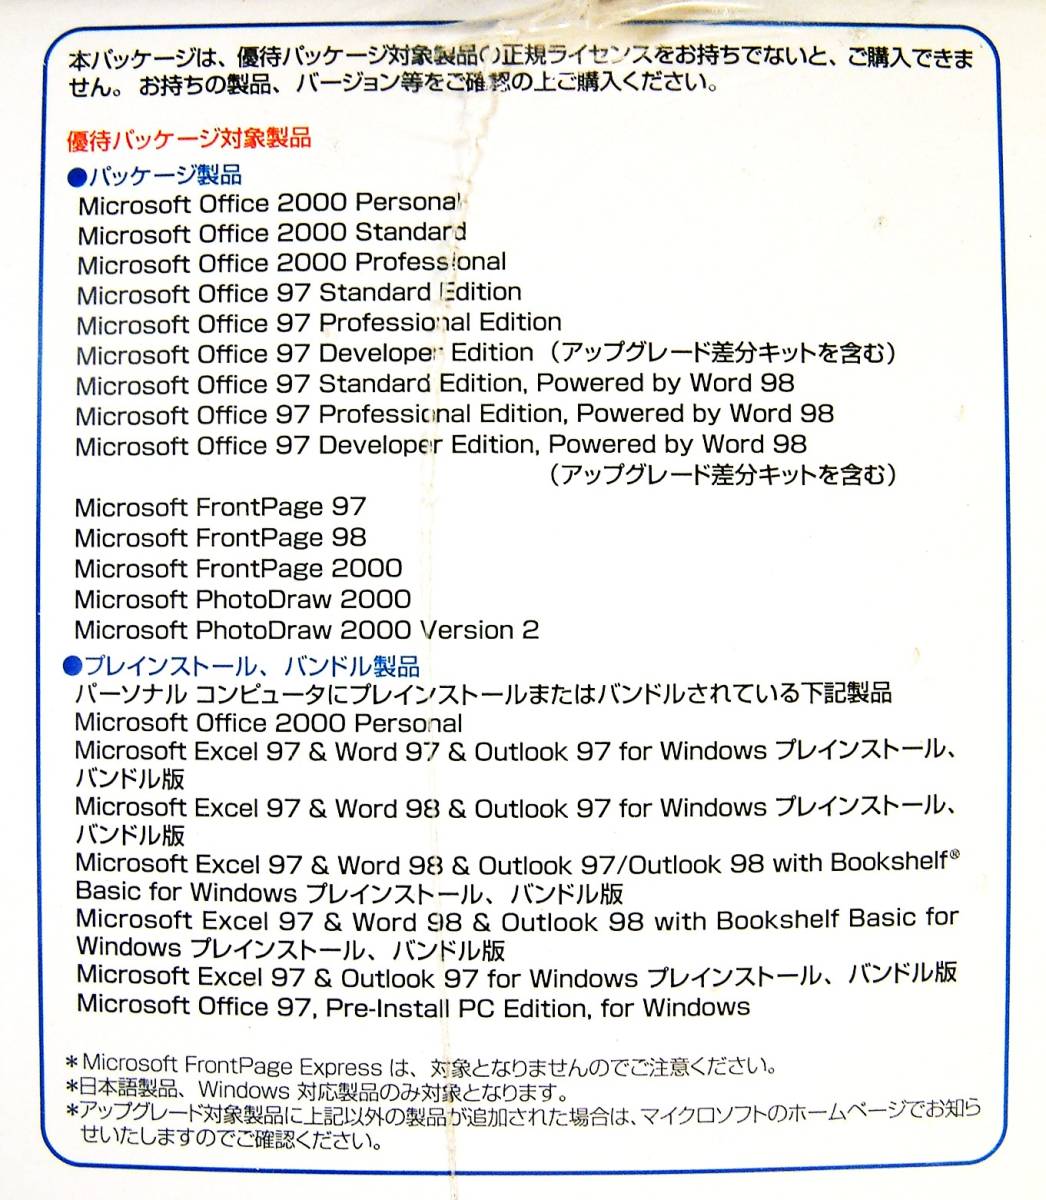 [1640]Microsoft Office Internet Package2000 гостеприимство нераспечатанный Microsoft офис интернет упаковка PhotoDraw фото draw 